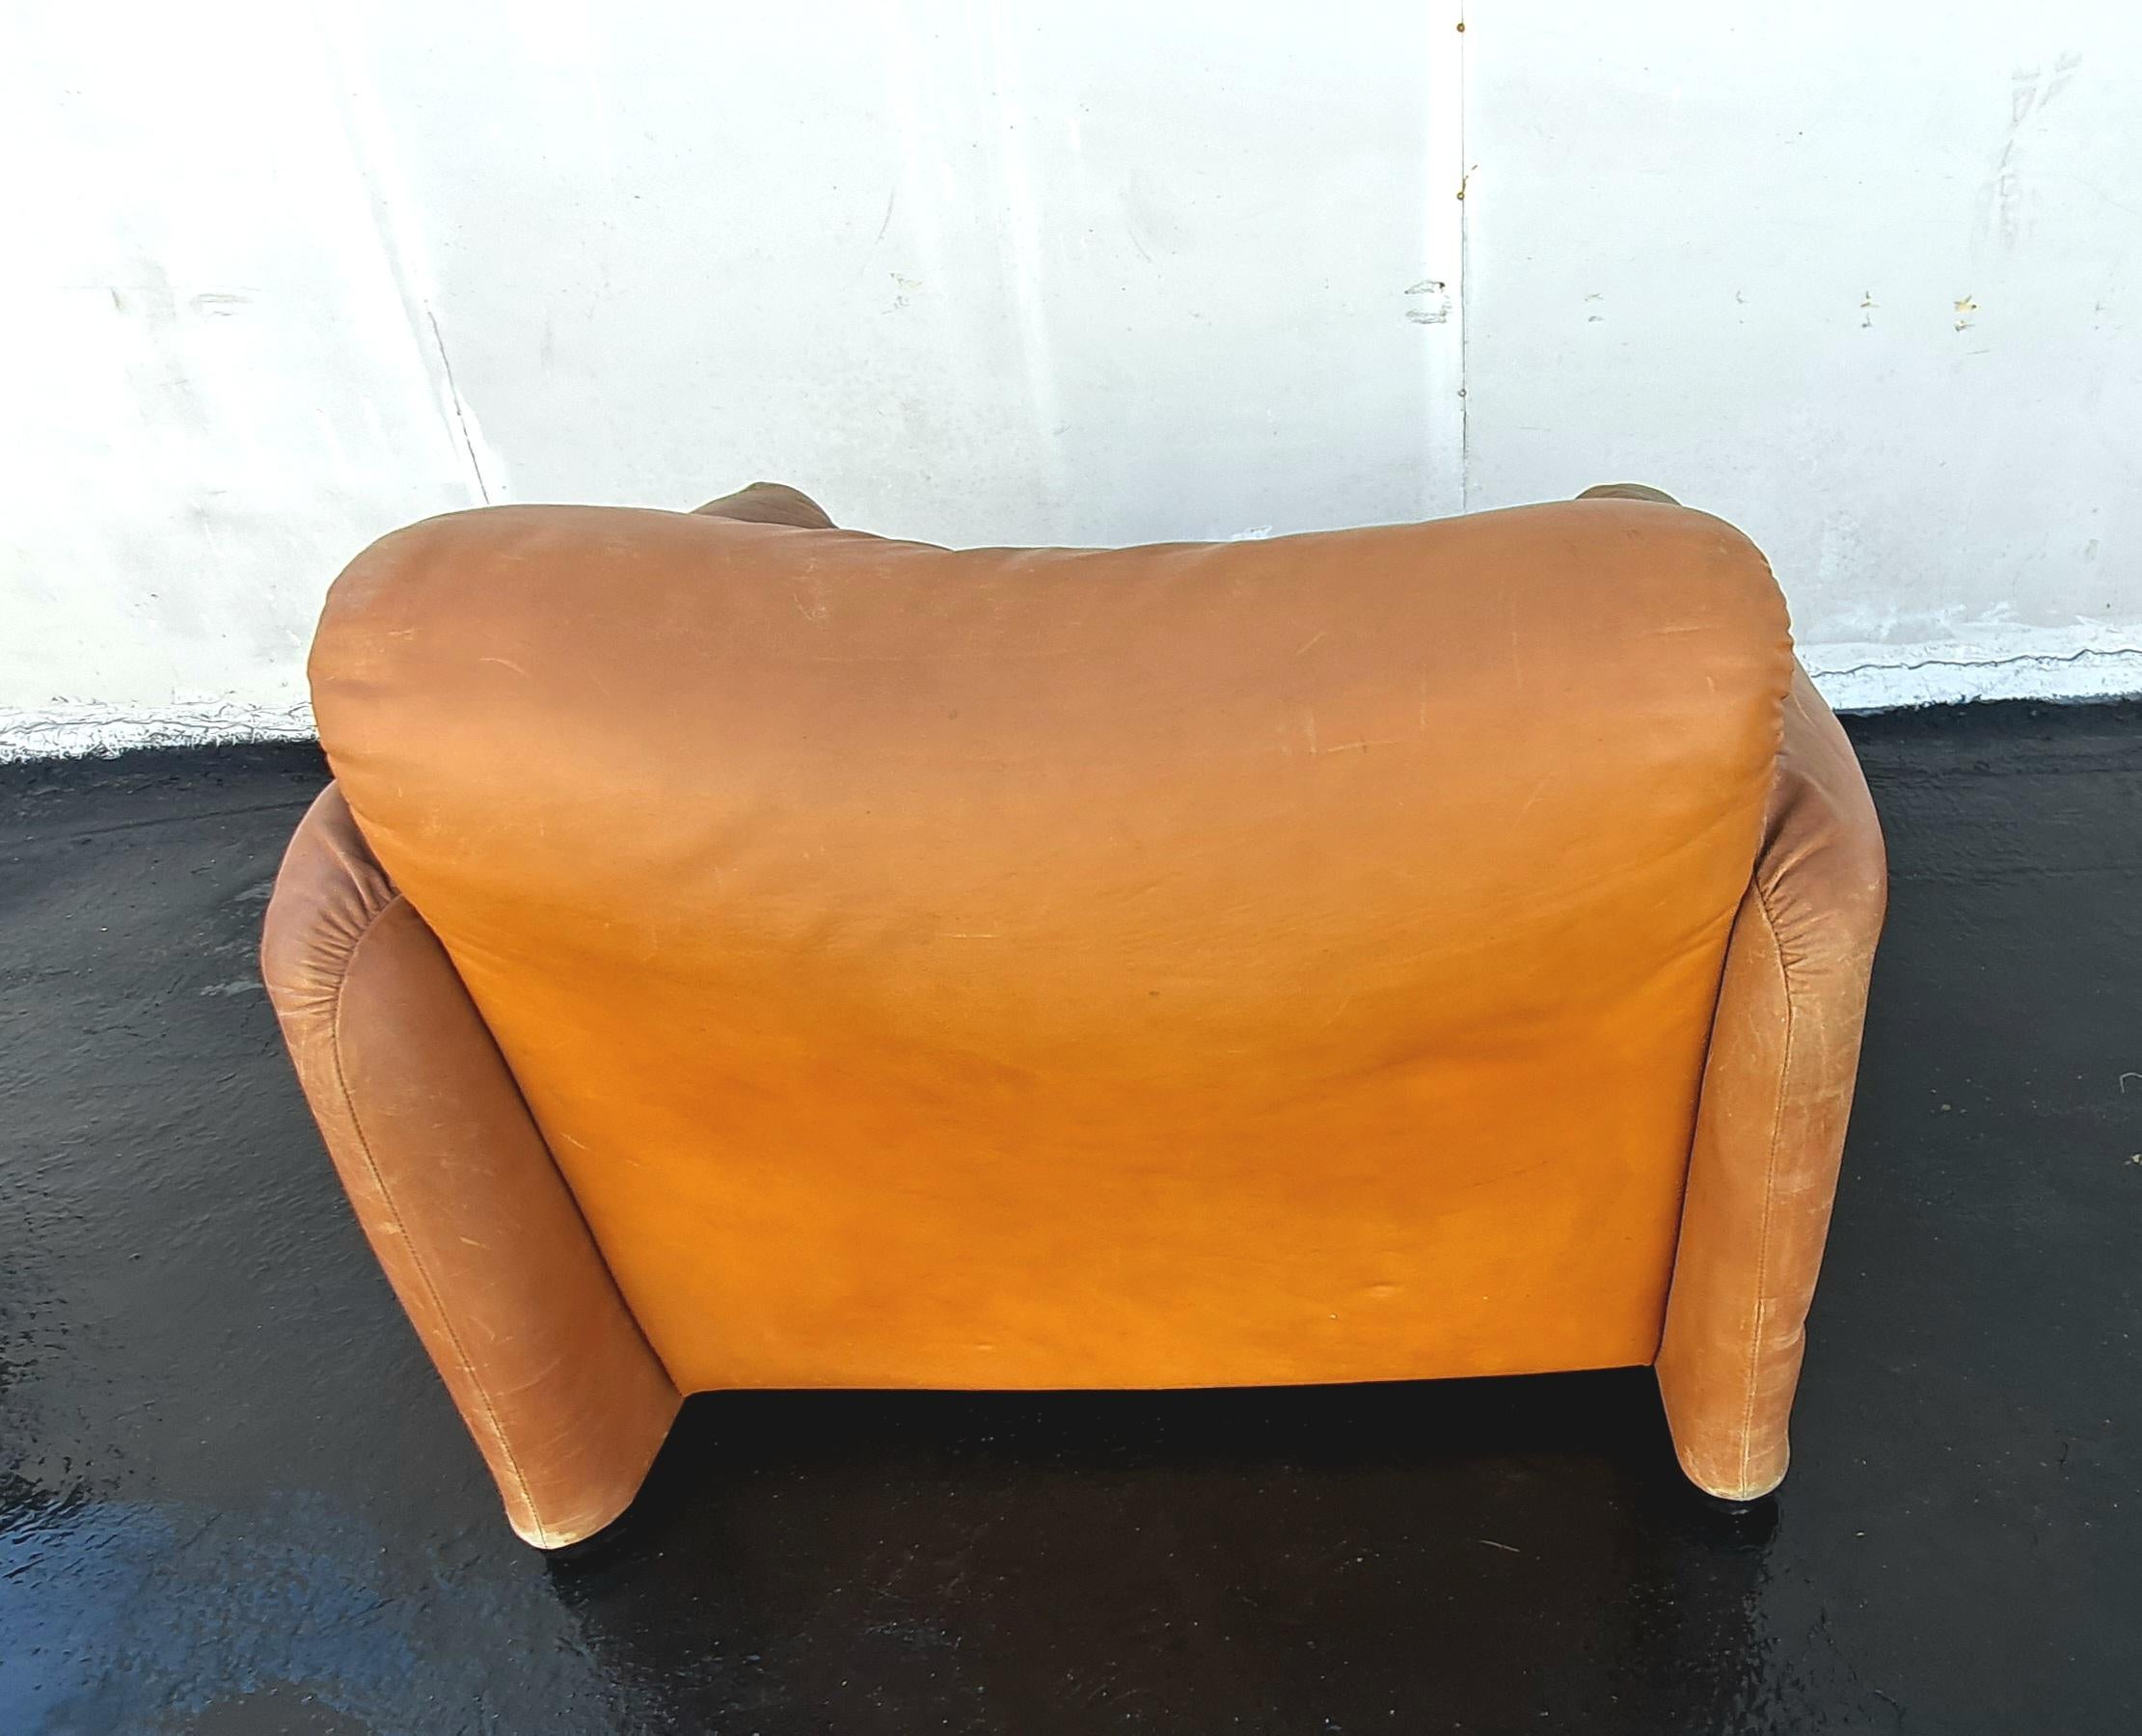 Maralunga Chair 675 by Vico Magistretti for Cassina. 1